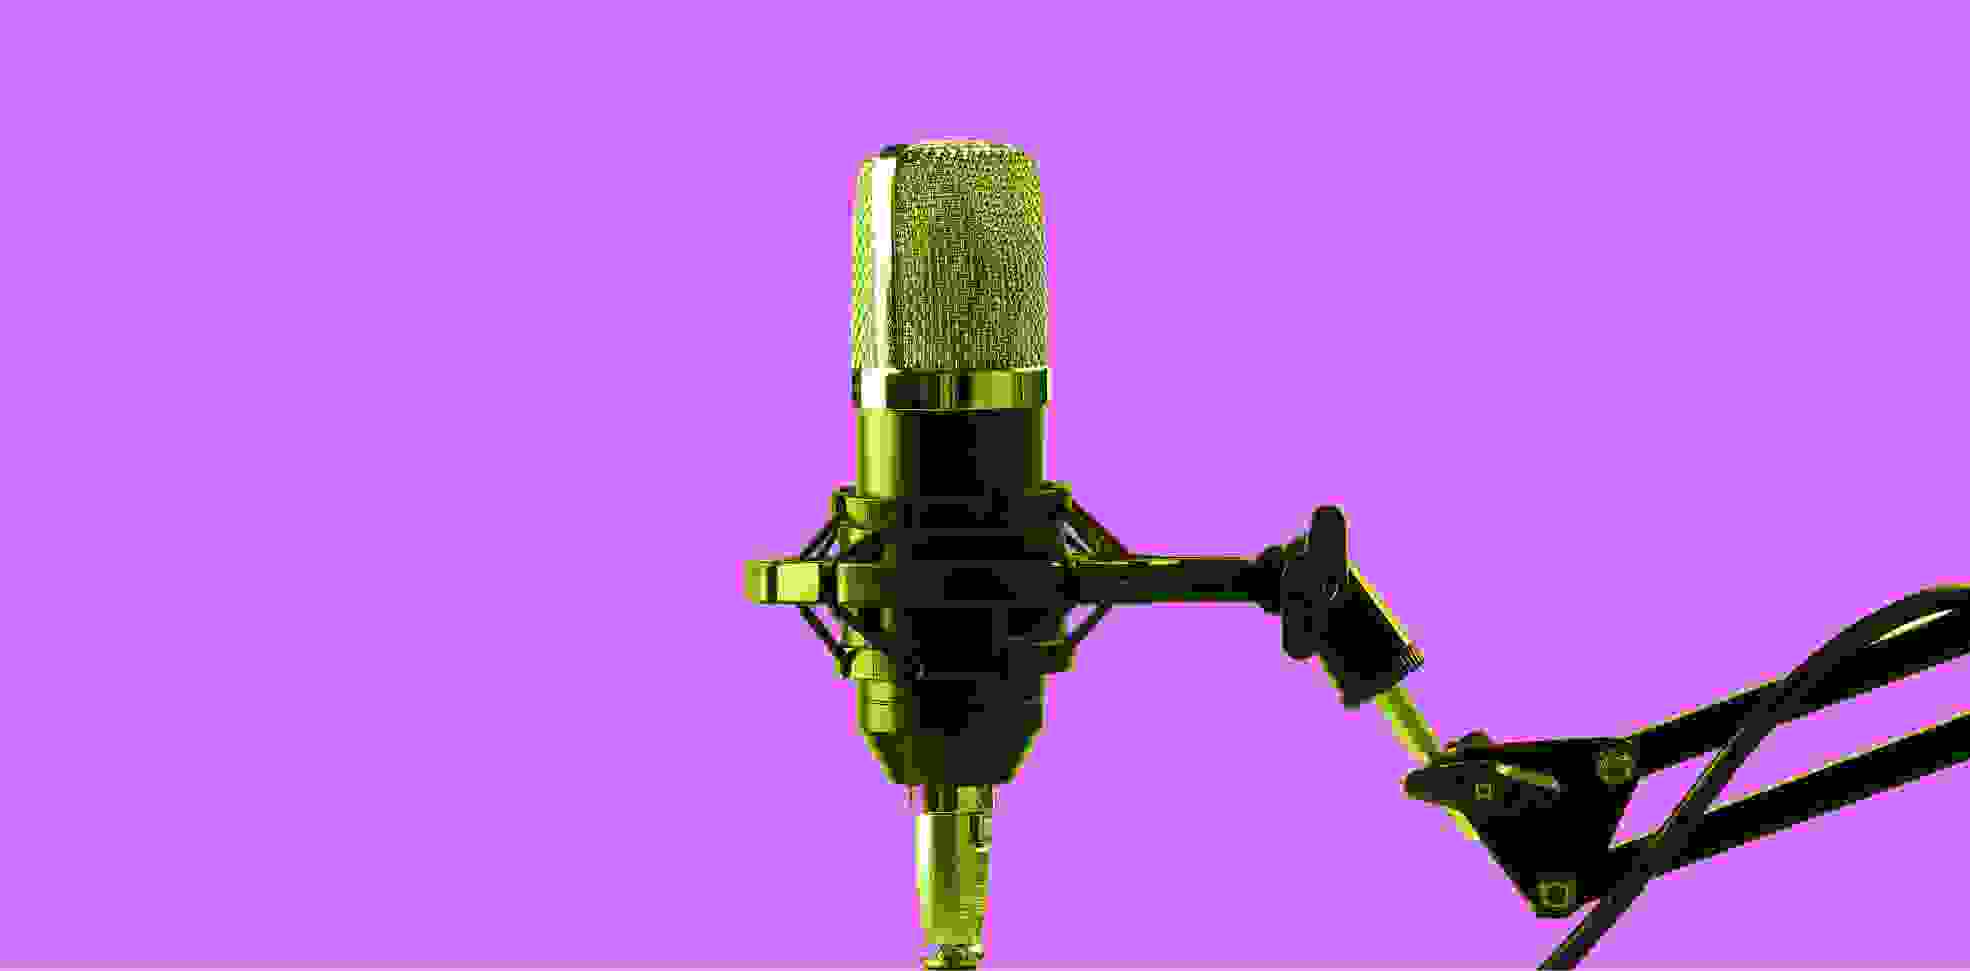 microphone on a tripod on a purple background